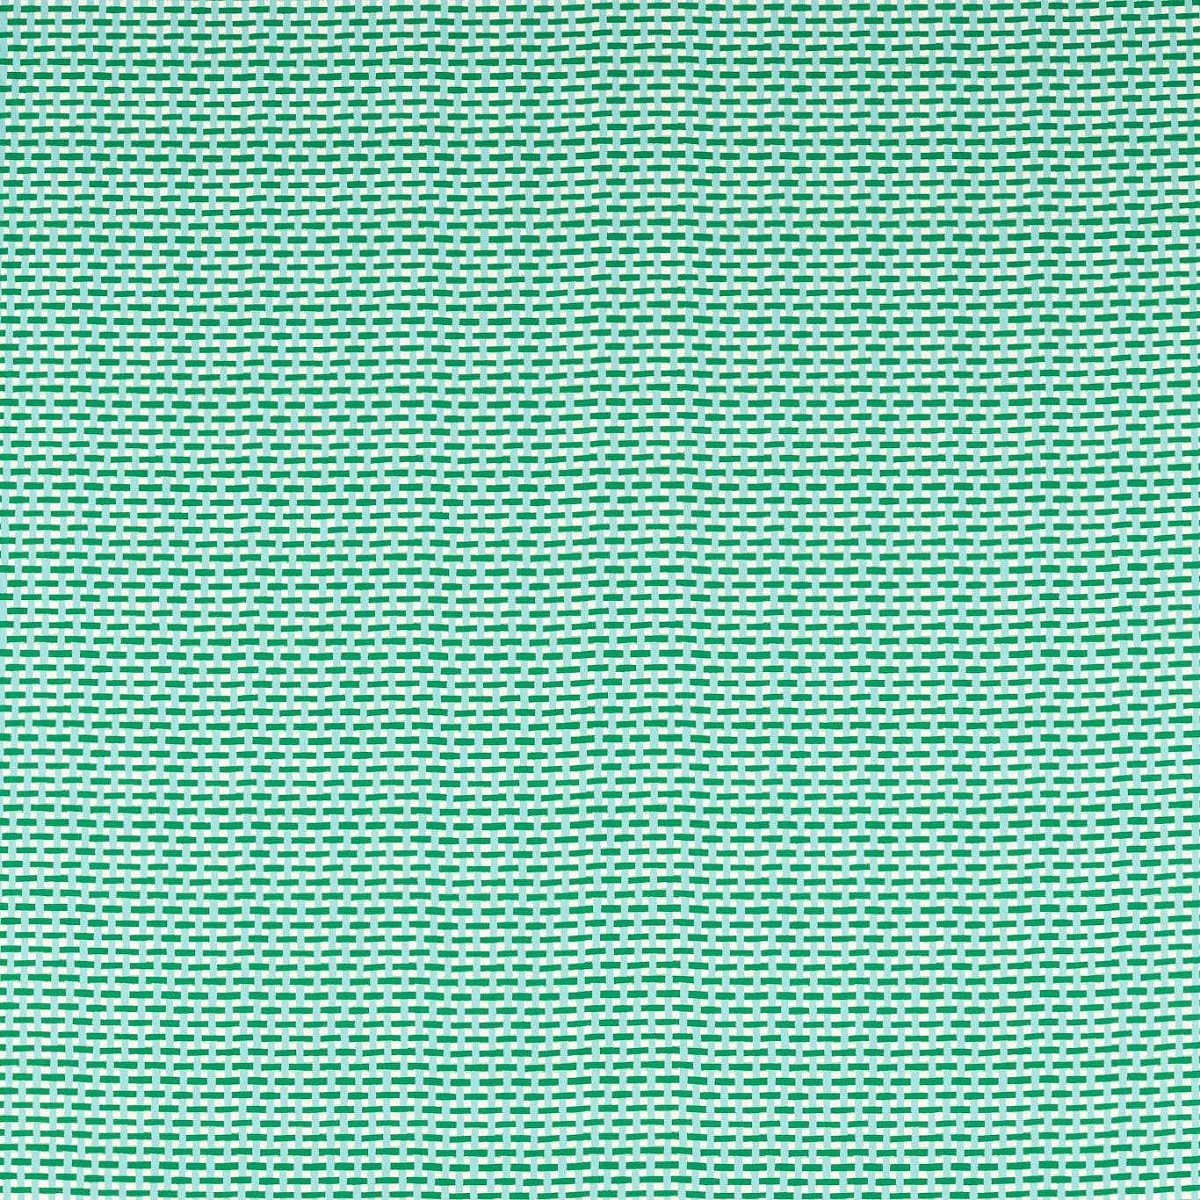 Basket Weave Emerald/Aquamarine Fabric by Harlequin